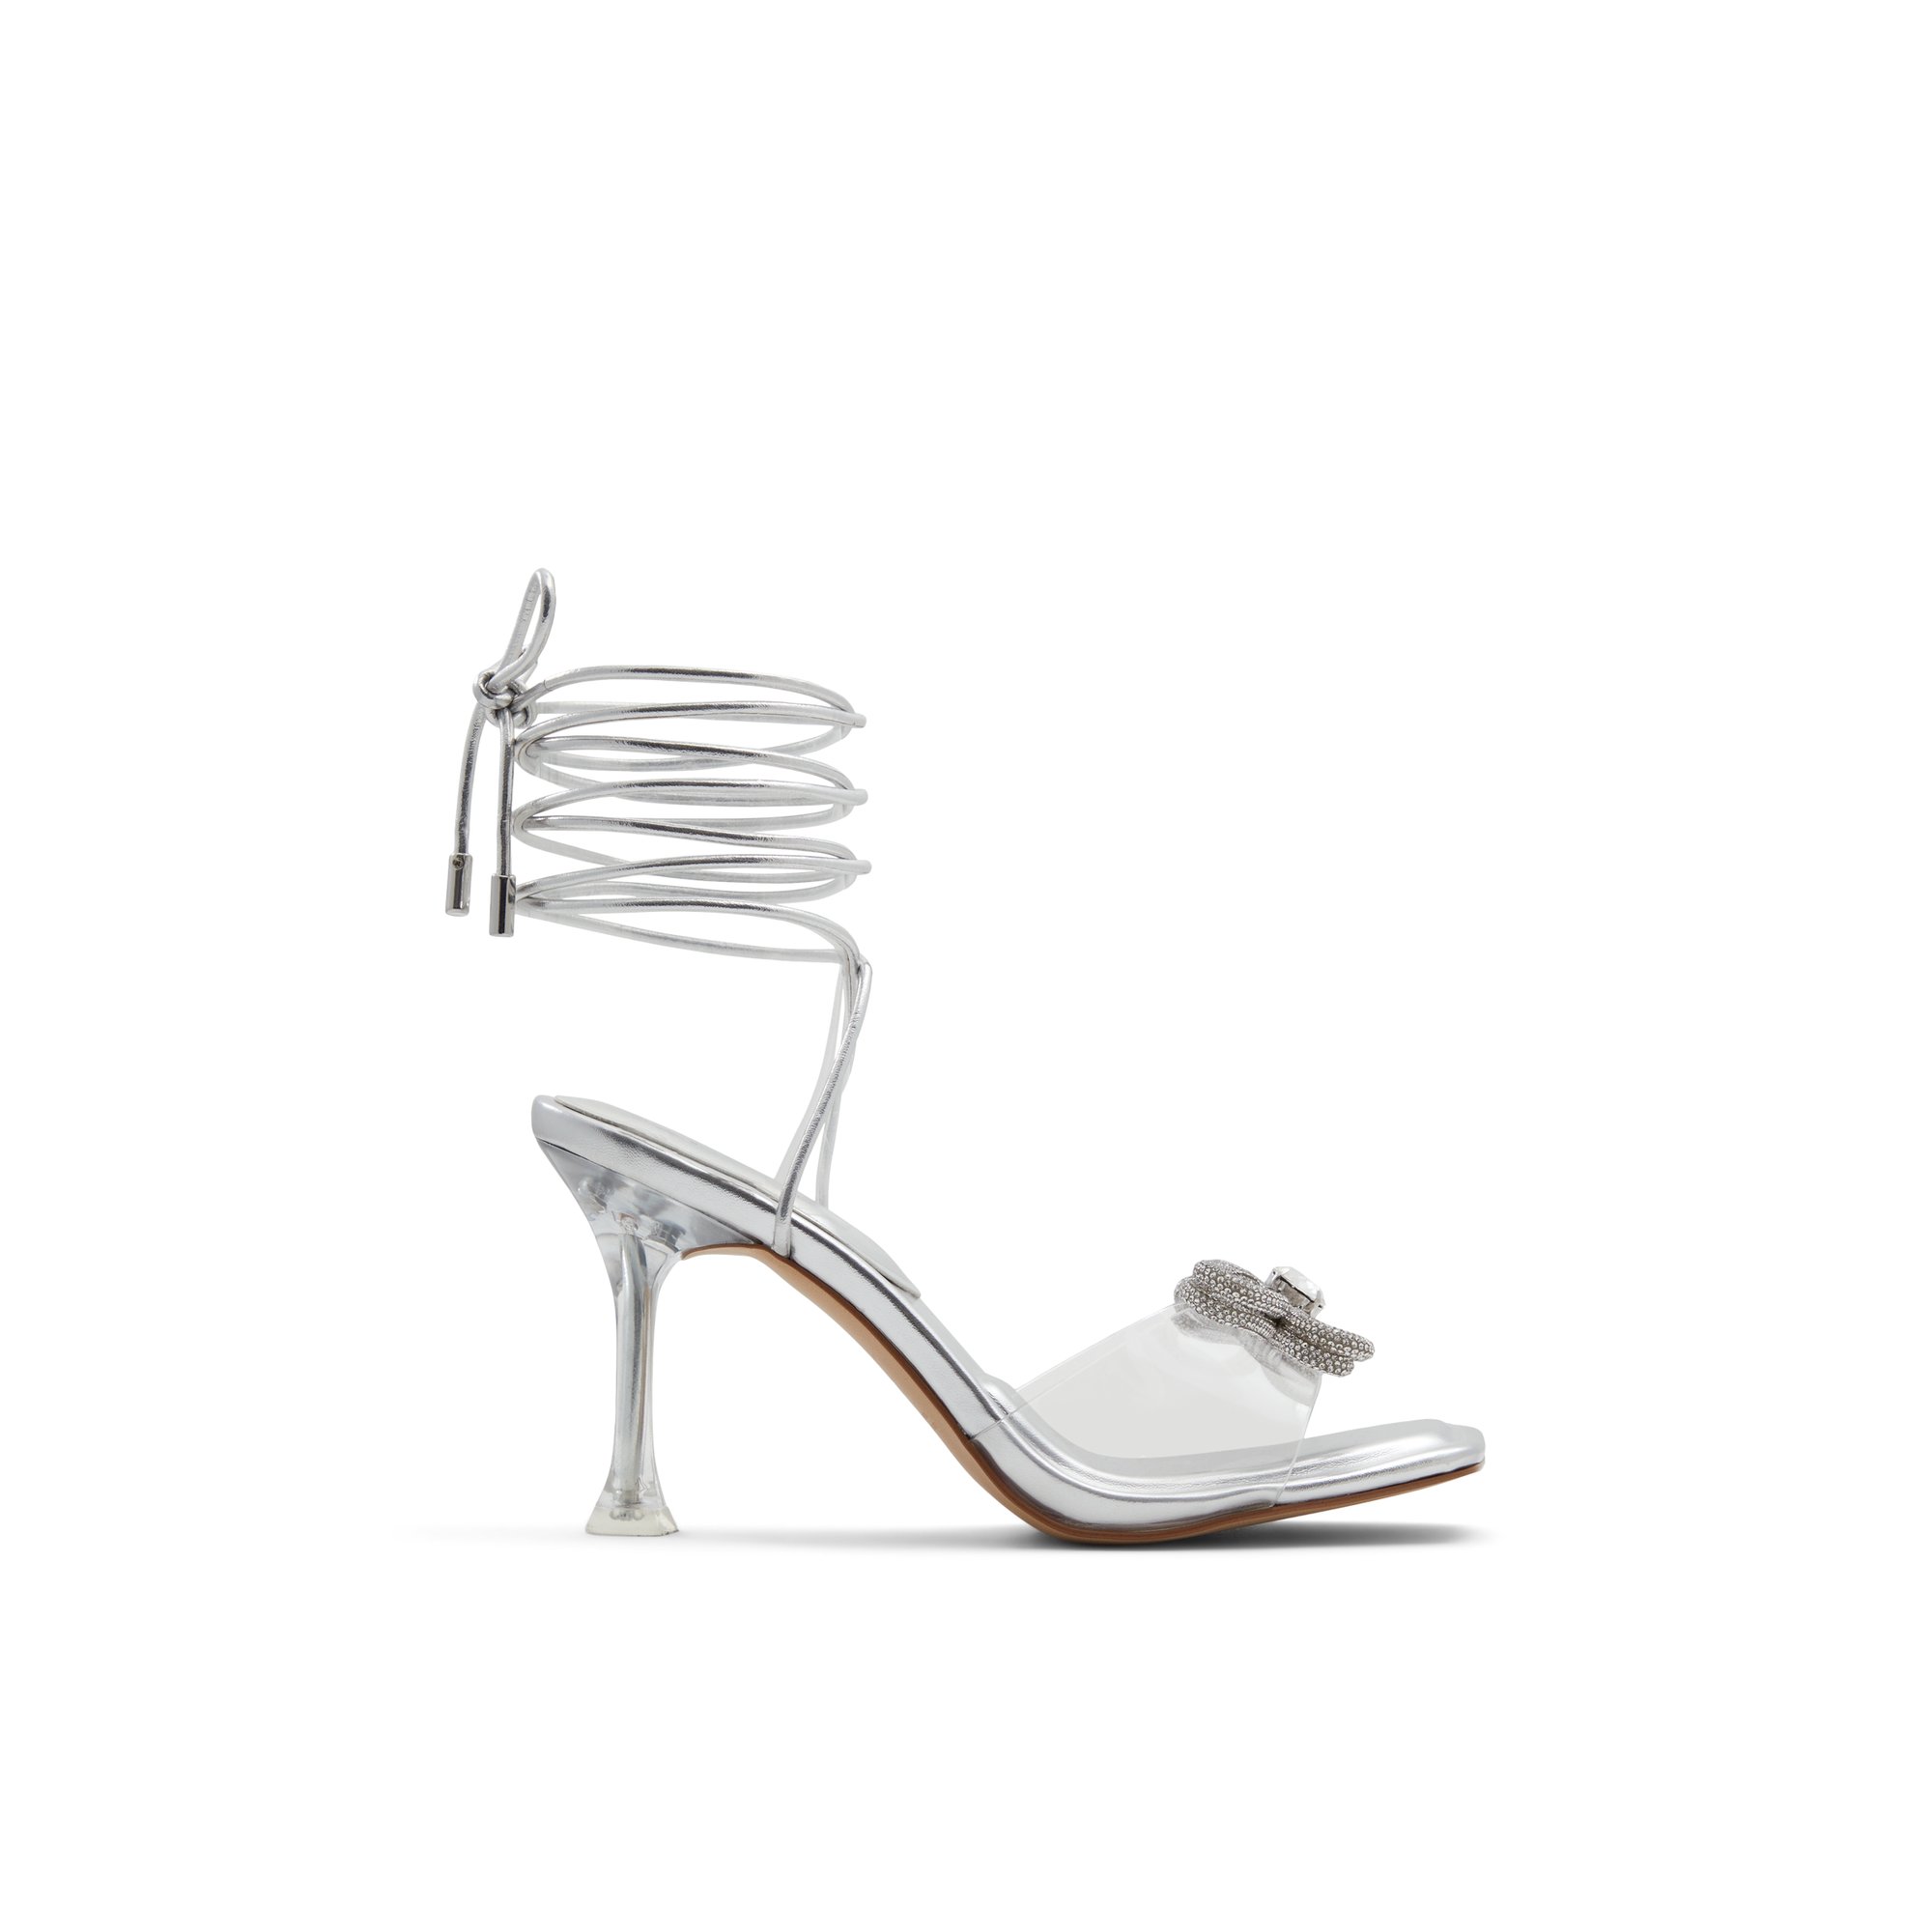 ALDO Nadeline - Women's Sandals Heeled - Silver